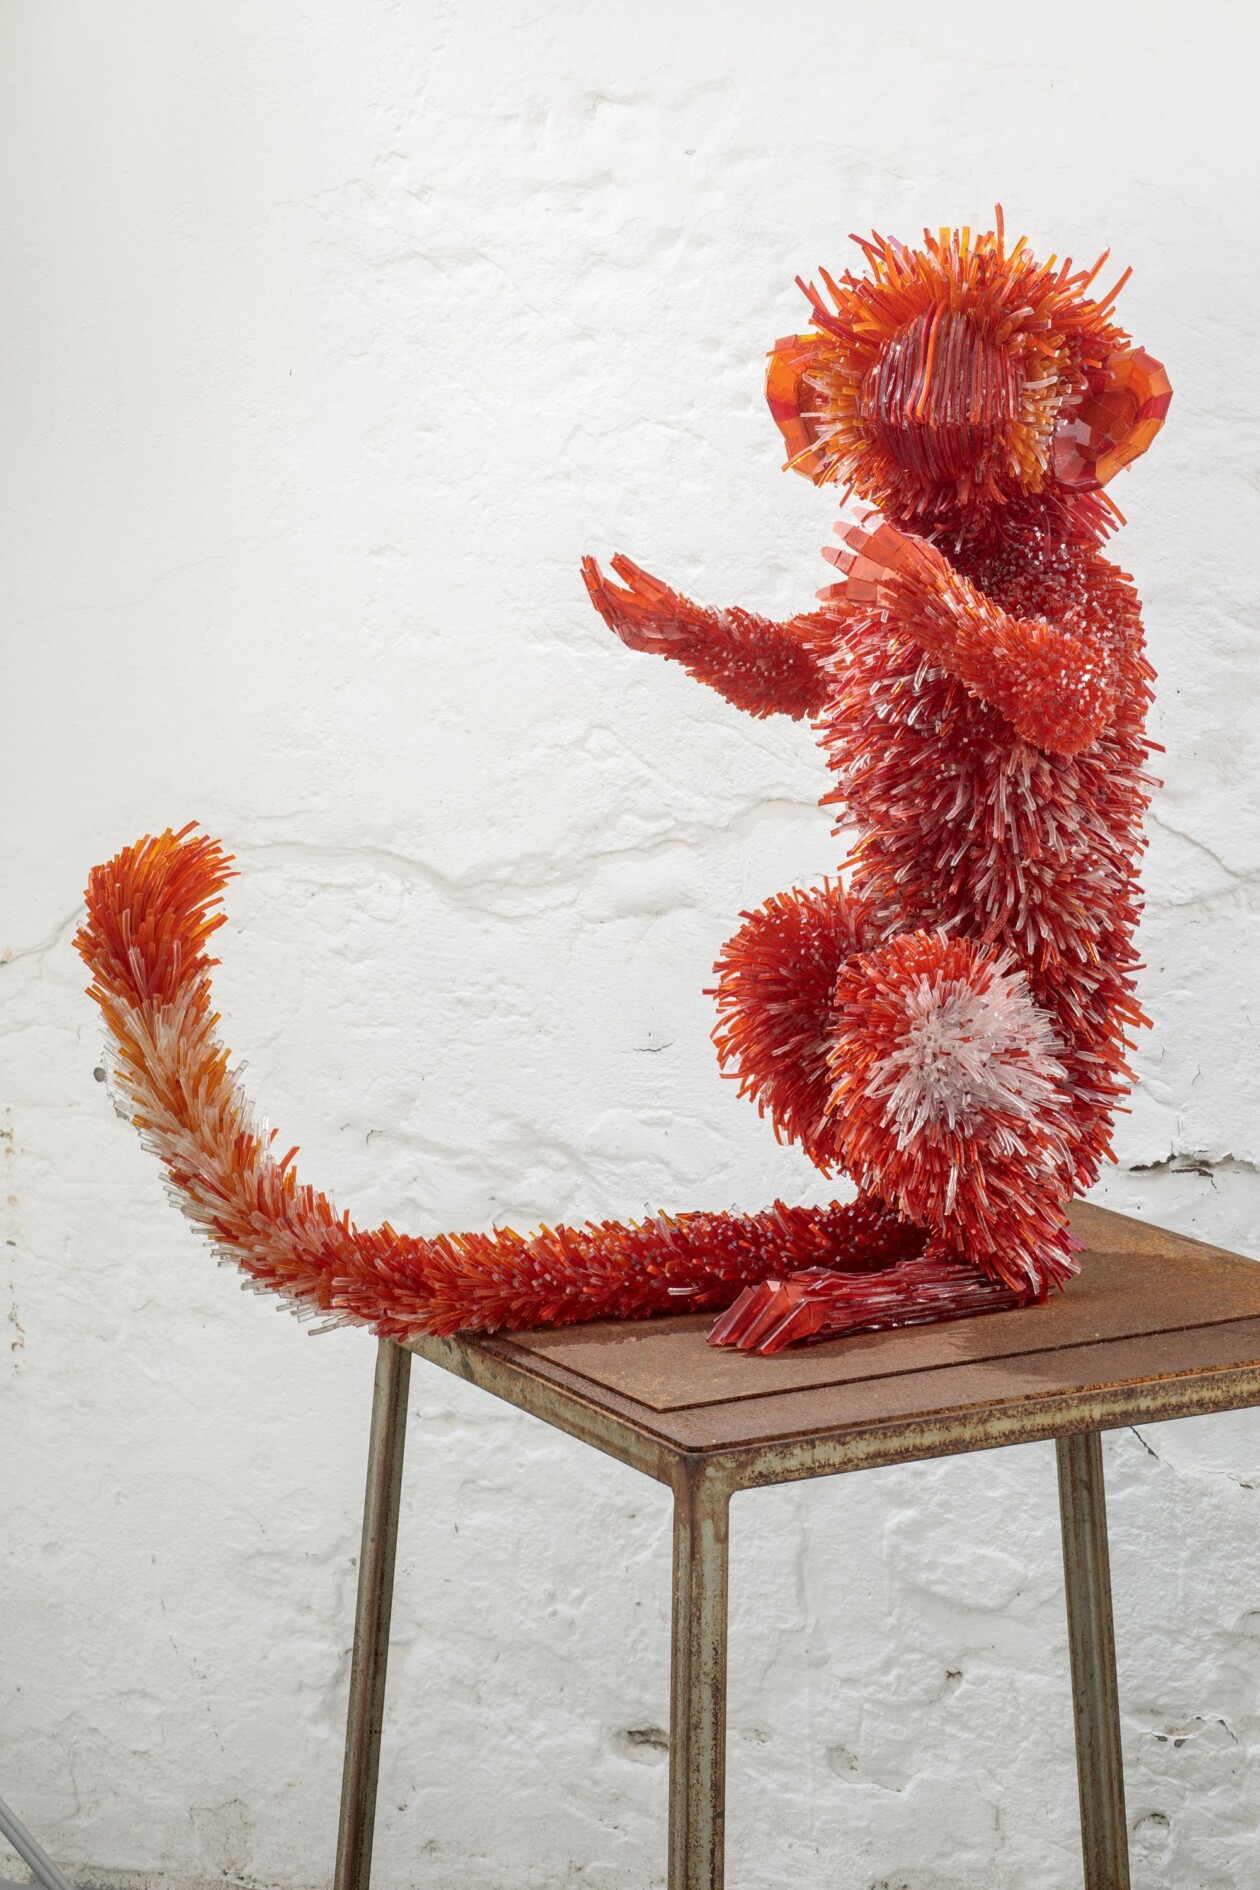 Shattered Glass Animal Sculptures By Polish Artist Marta Klonowska (8)